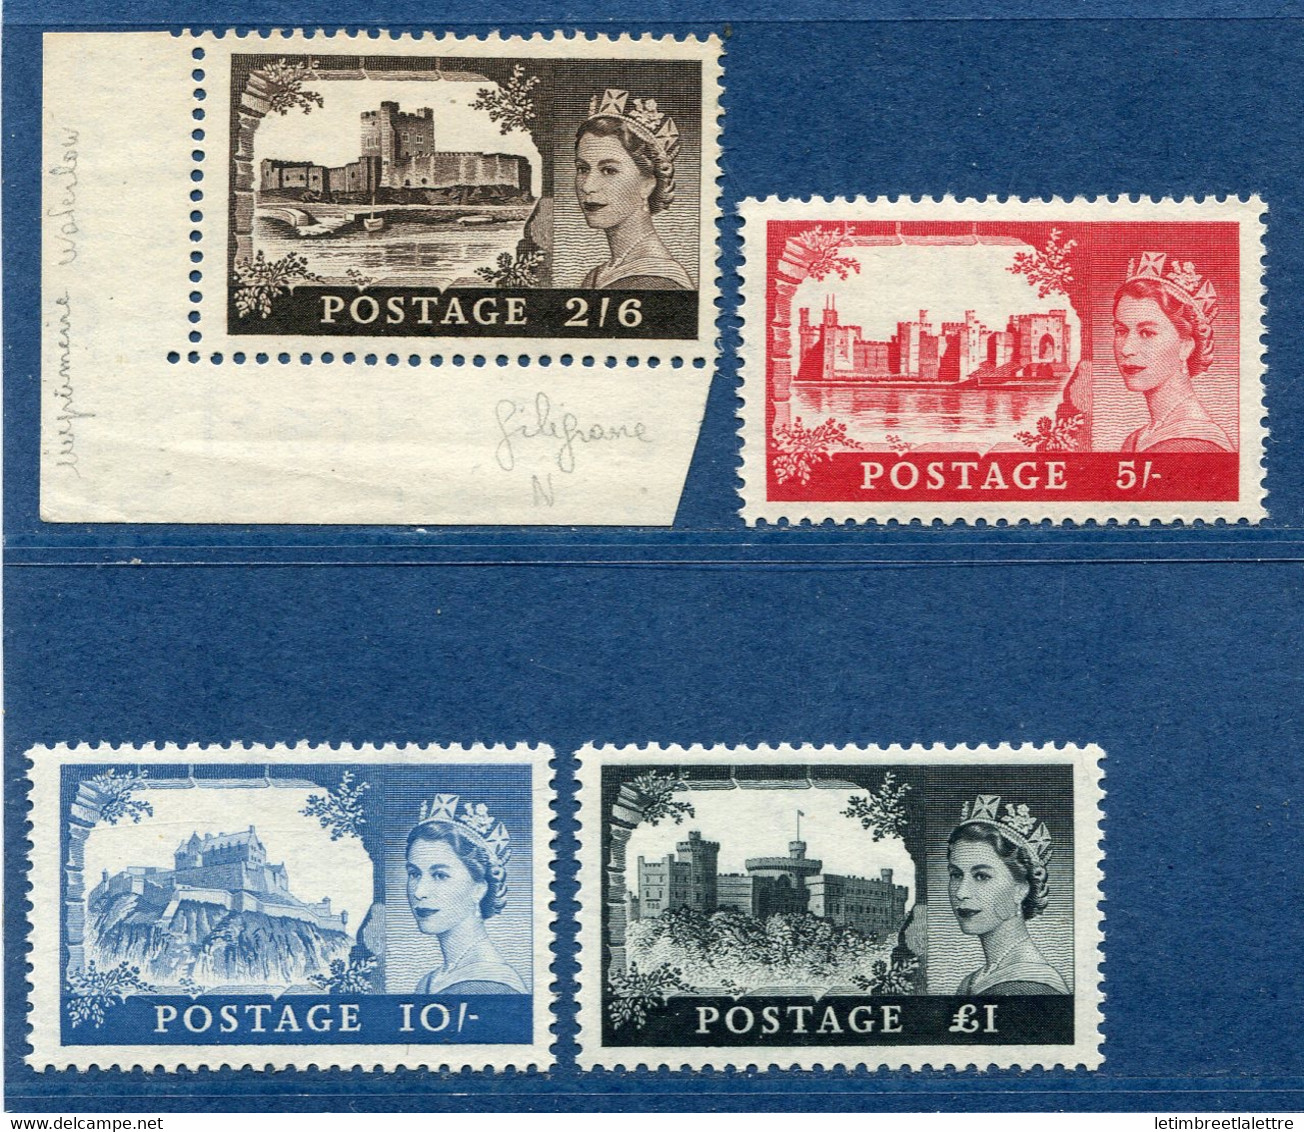 ⭐ Grande Bretagne - YT N° 283 à 286 ** - Neuf Sans Charnière - 1955 ⭐ - Unused Stamps